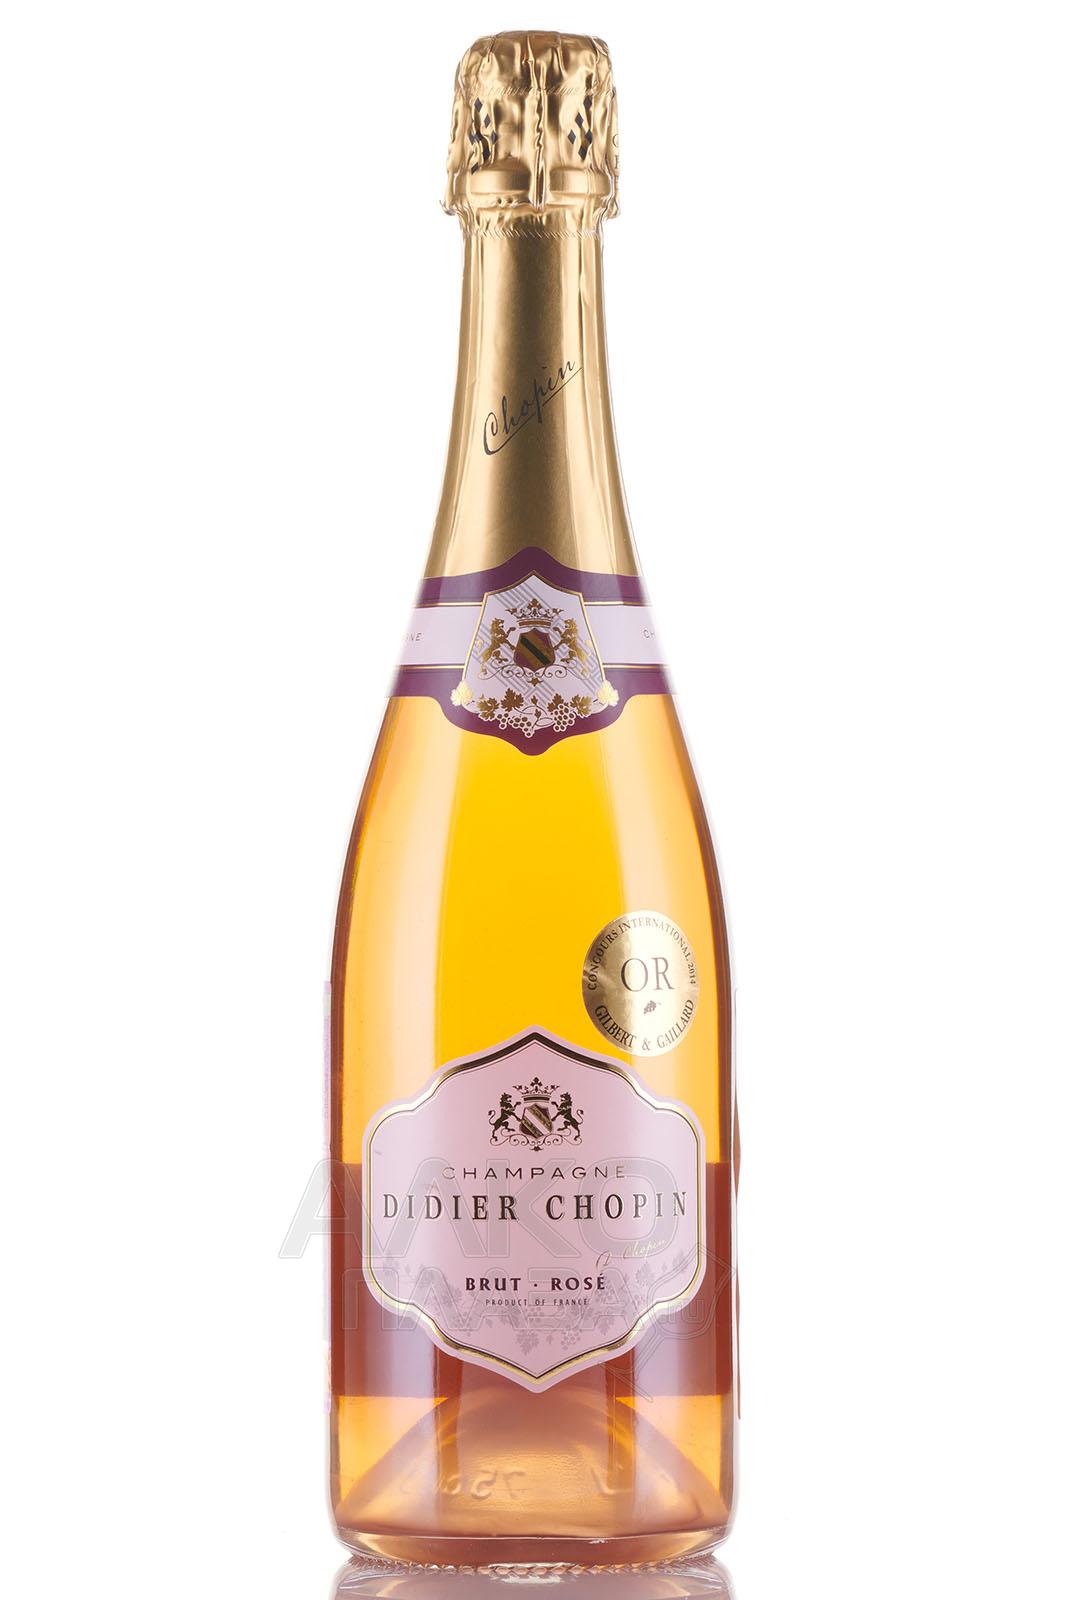 Didier Chopin Brut Rose Champagne AOC - шампанское Дидье Шопен 0.75 л